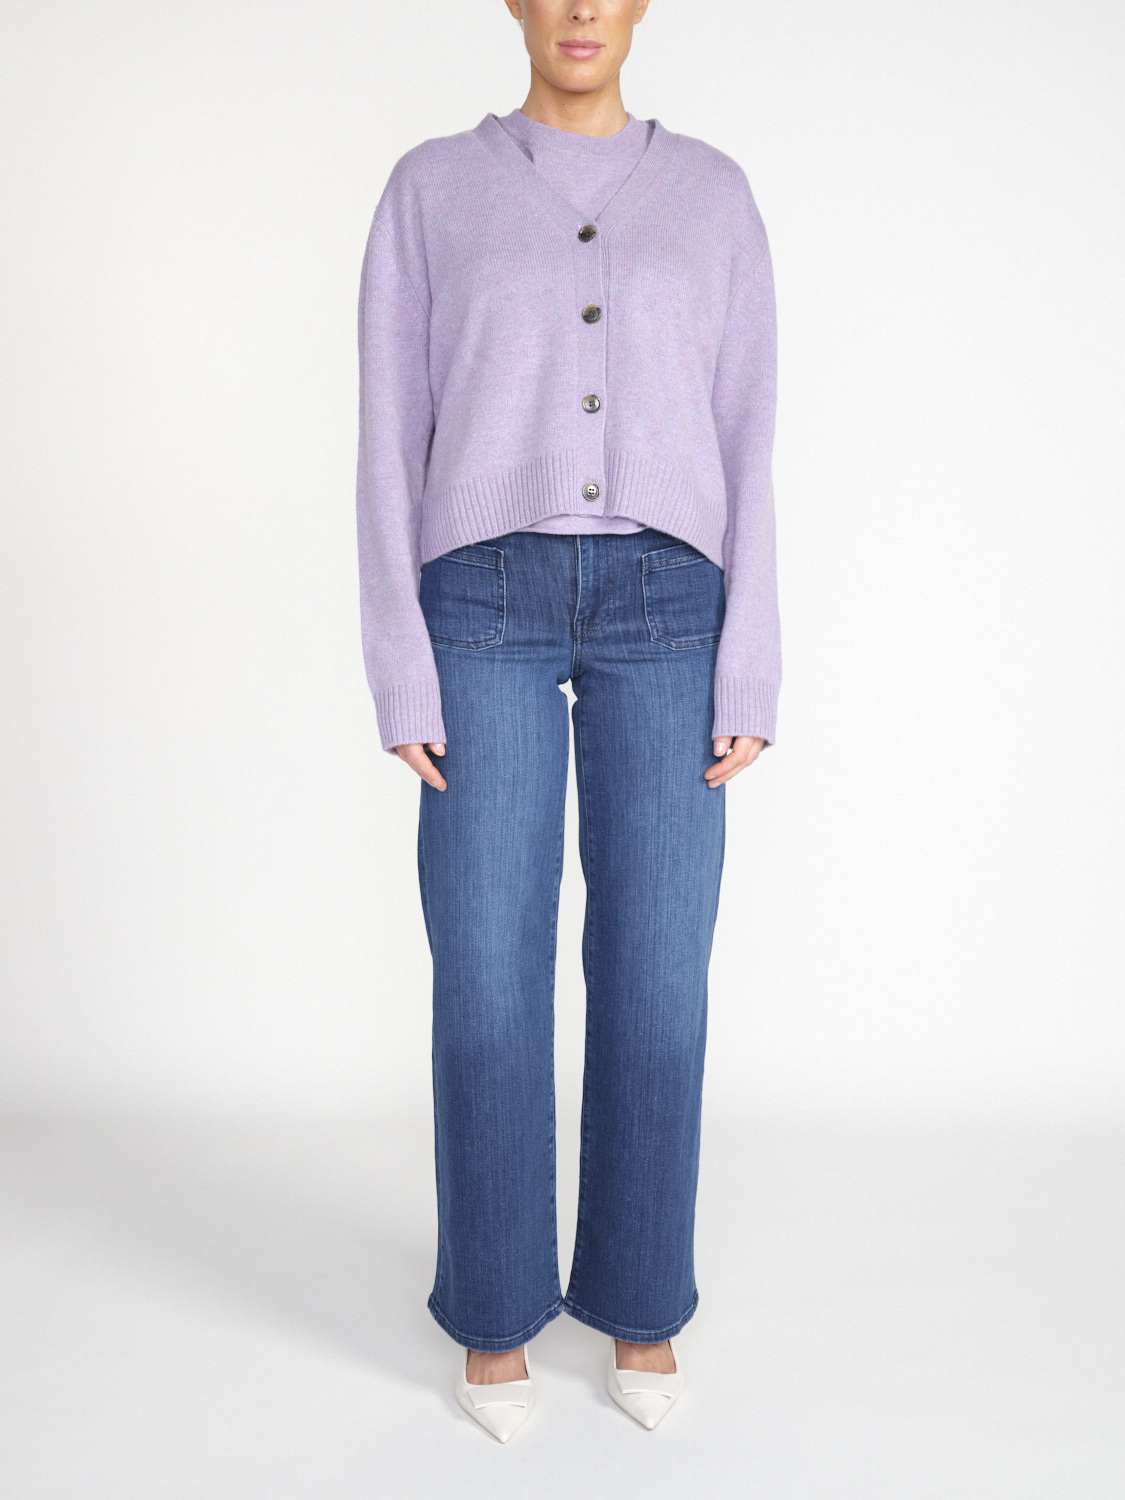 Lisa Yang Marion - Short cashmere cardigan  lila S/M